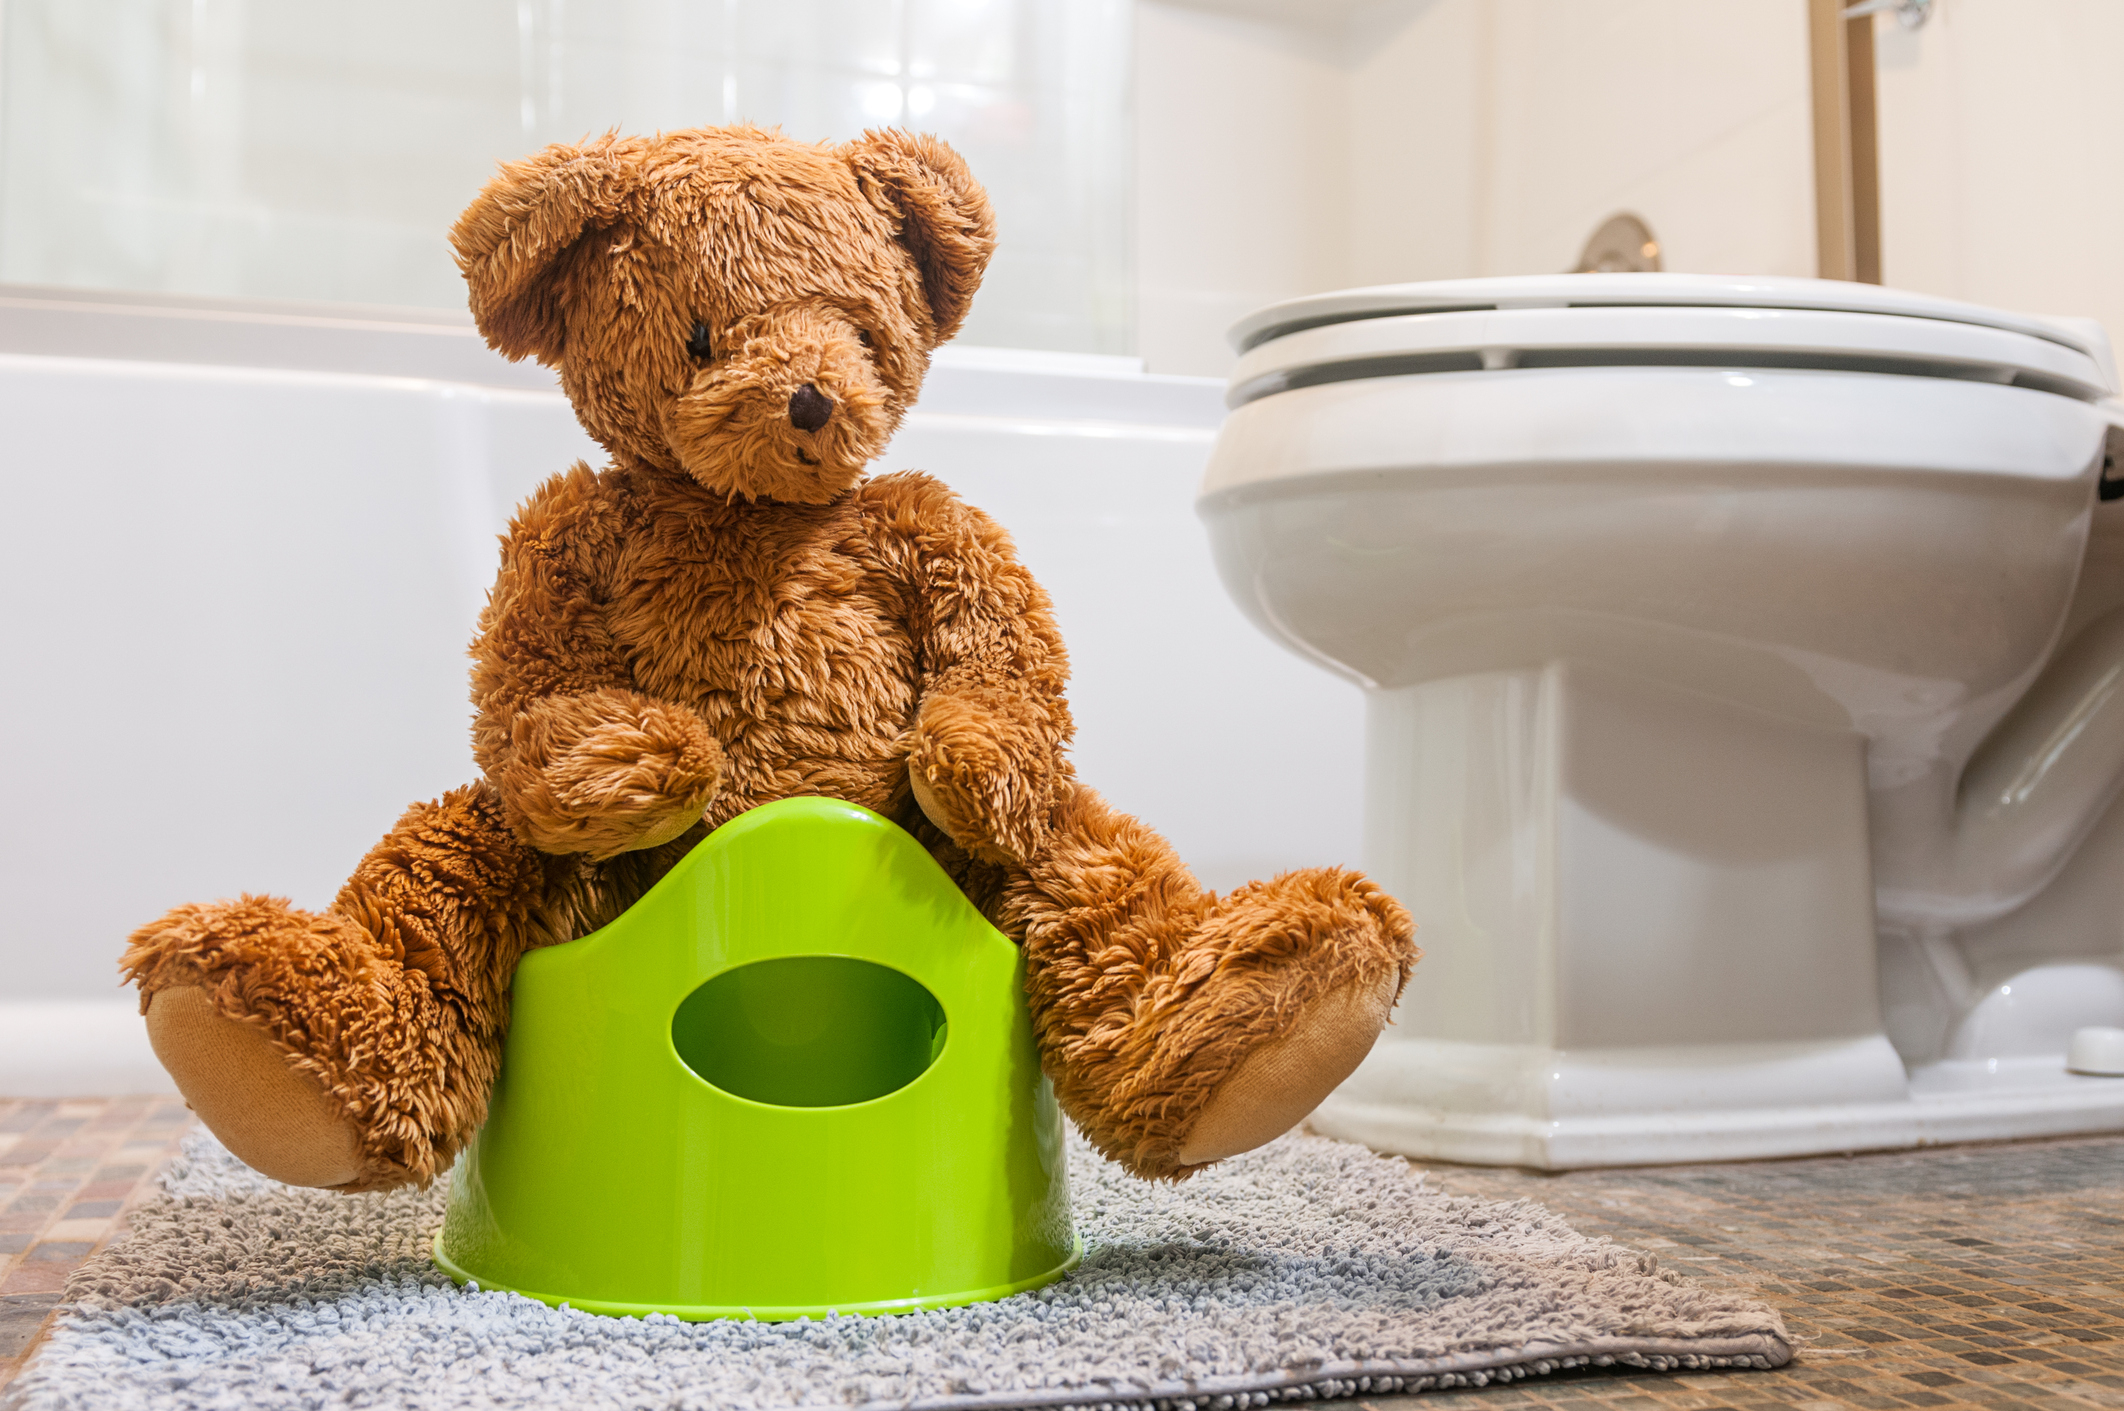 Teddy bear sitting on a small potty in a bathroom, representing potty training concept